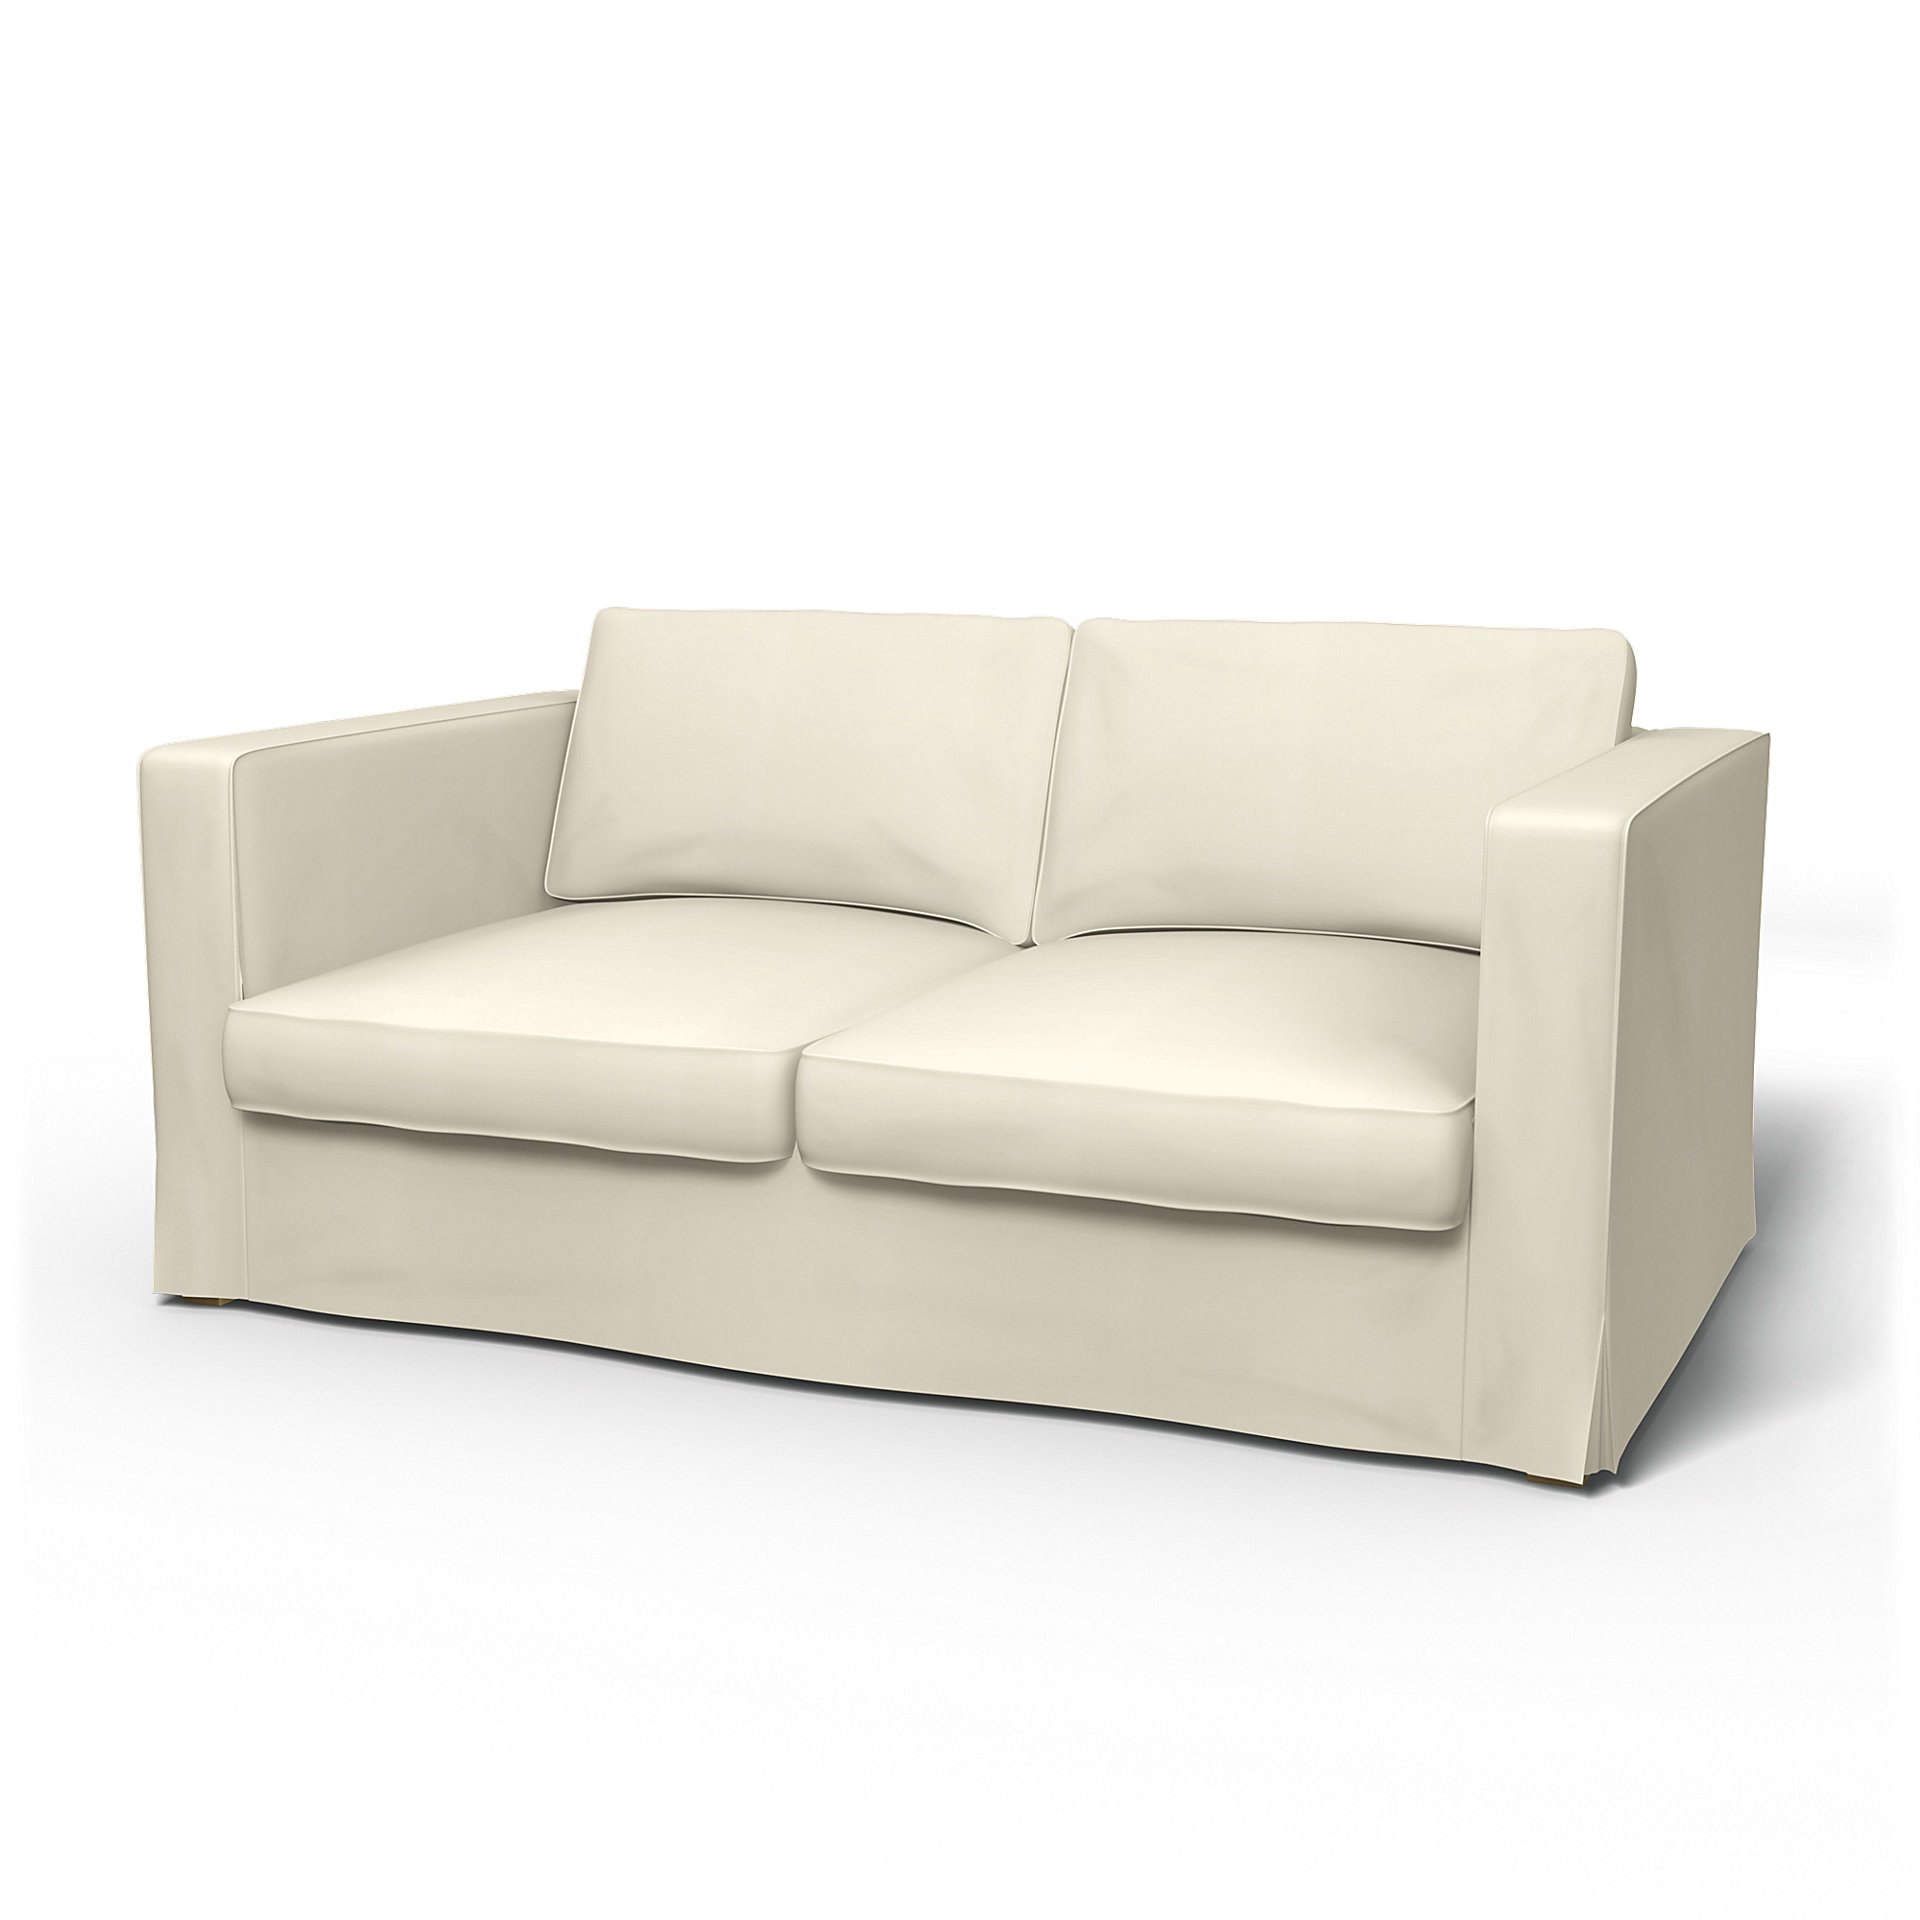 IKEA - Karlstad 2 Seater Sofa Cover, Tofu, Cotton - Bemz